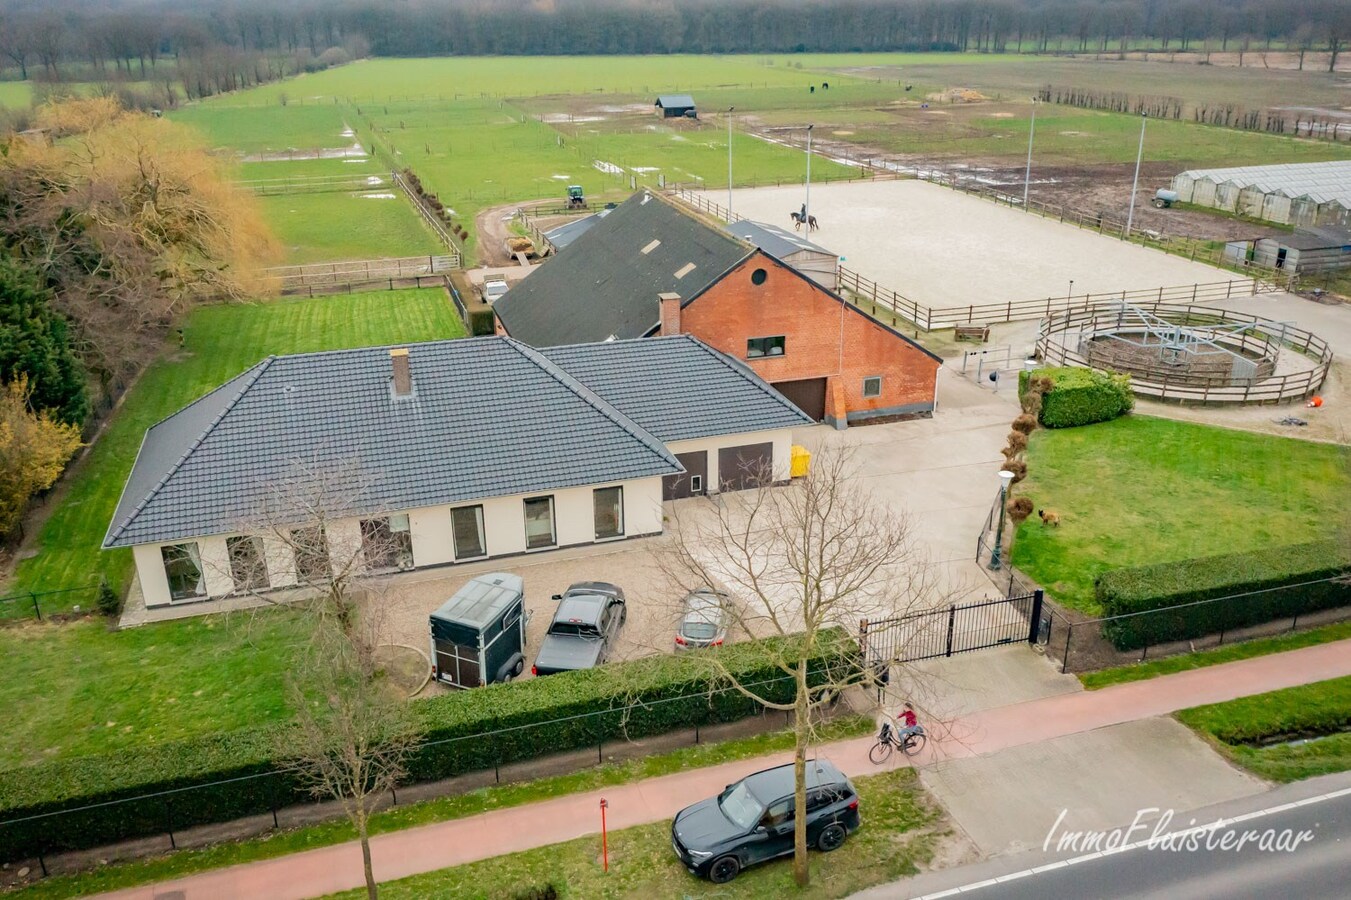 Property for sale in Rijkevorsel